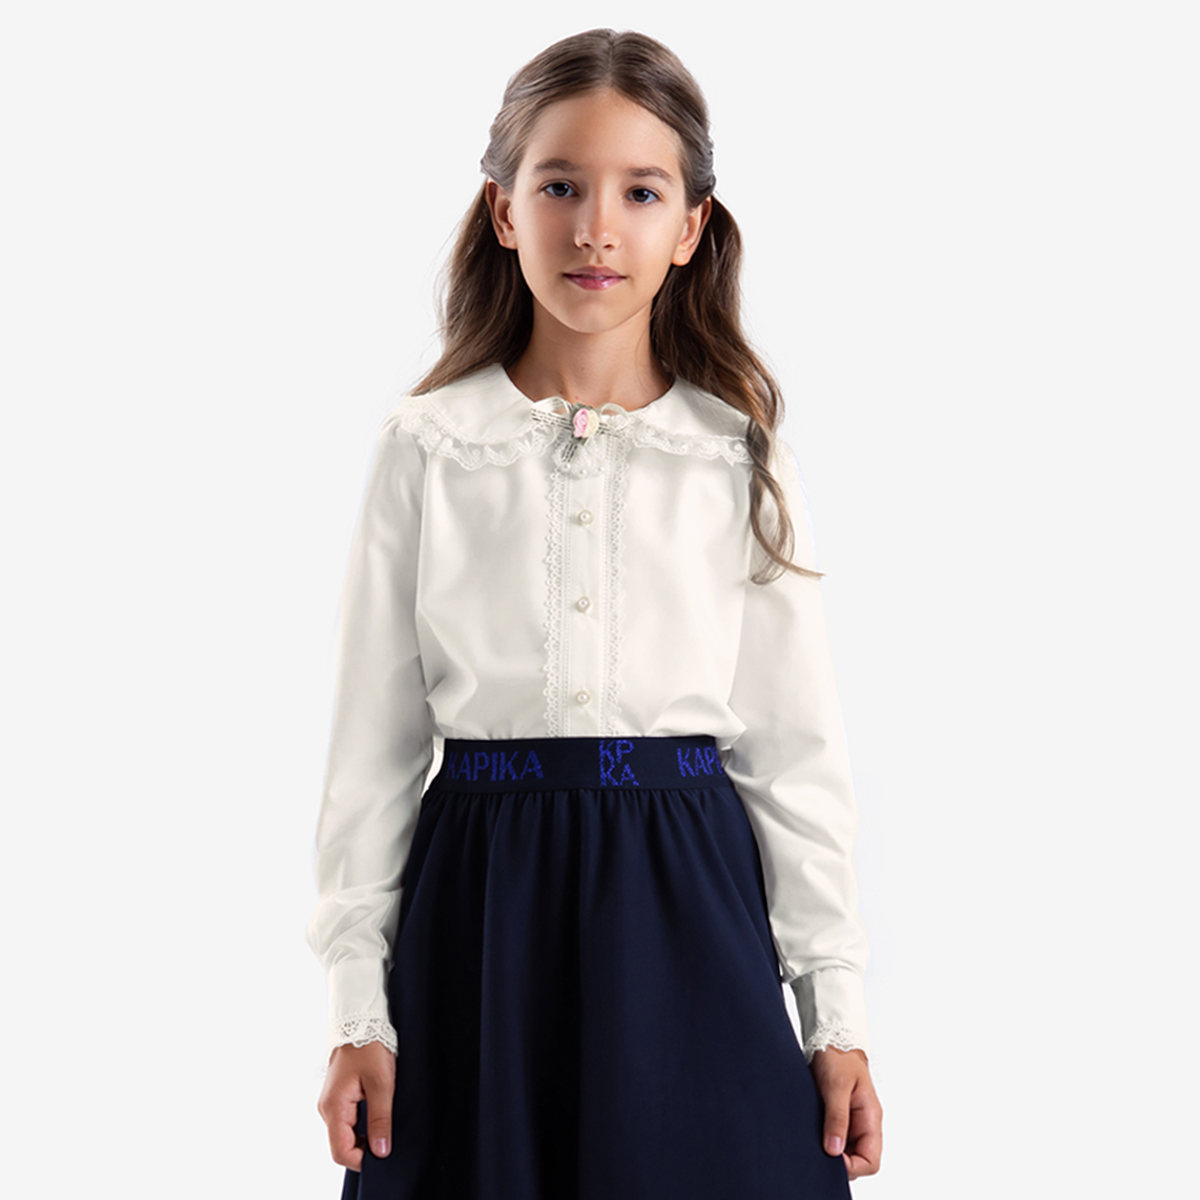 Блузка детская Kapika IJGCB01-02, цвет экрю, размер 158 блузка женская вилена размер 50